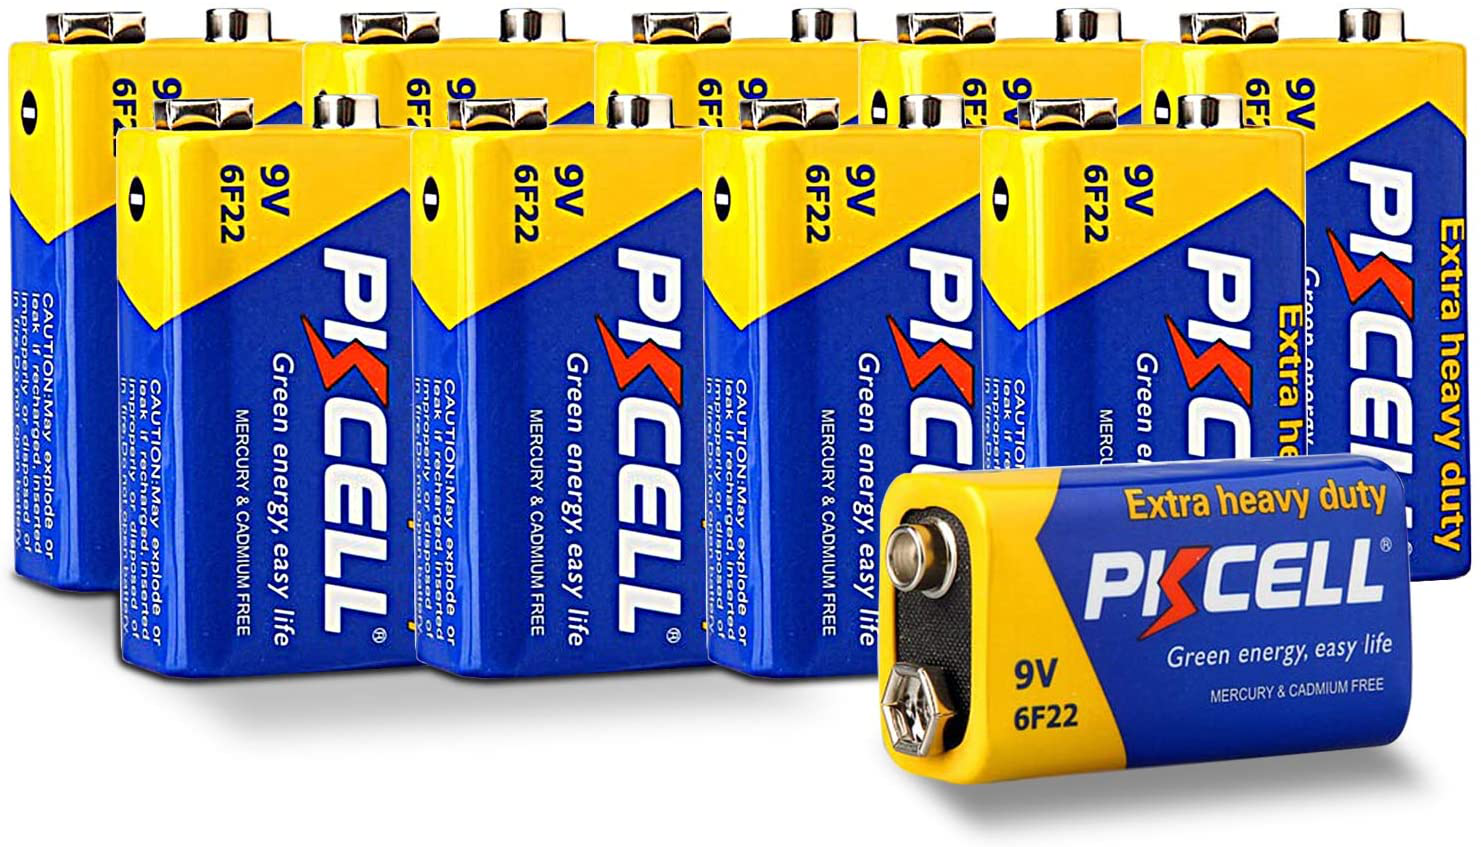 PKCELL 9V Maximum Power Dry Battery (10 Count)– Ultra Long-Lasting 9 Volt Carbon Zinc Battery, 3-Year Shelf Life, Leak-Proof 9V Battery for Smoke Detectors